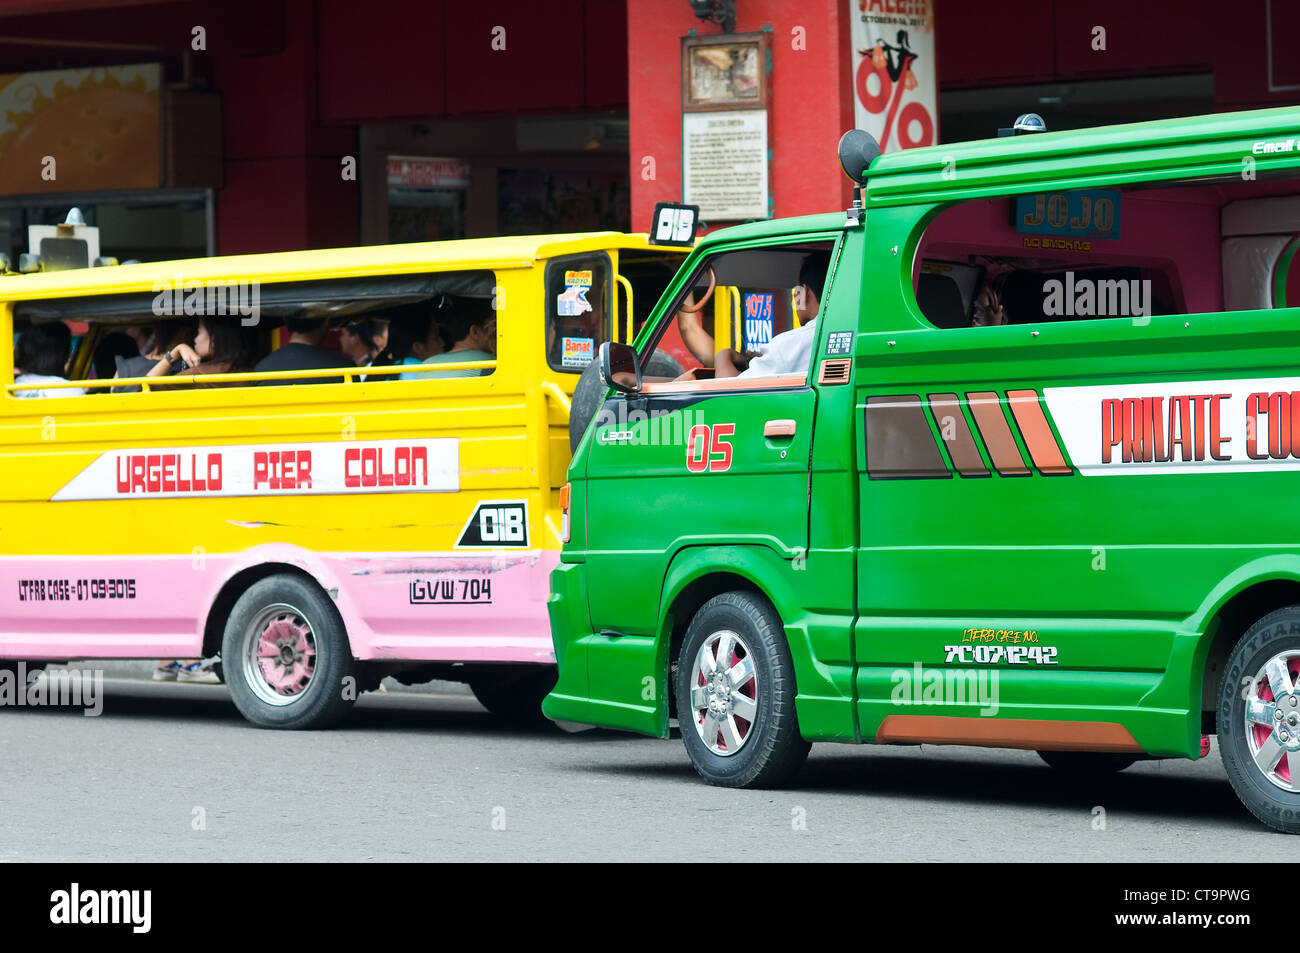 Jeepney, Colon Street, Cebu City, Philippines Banque D'Images